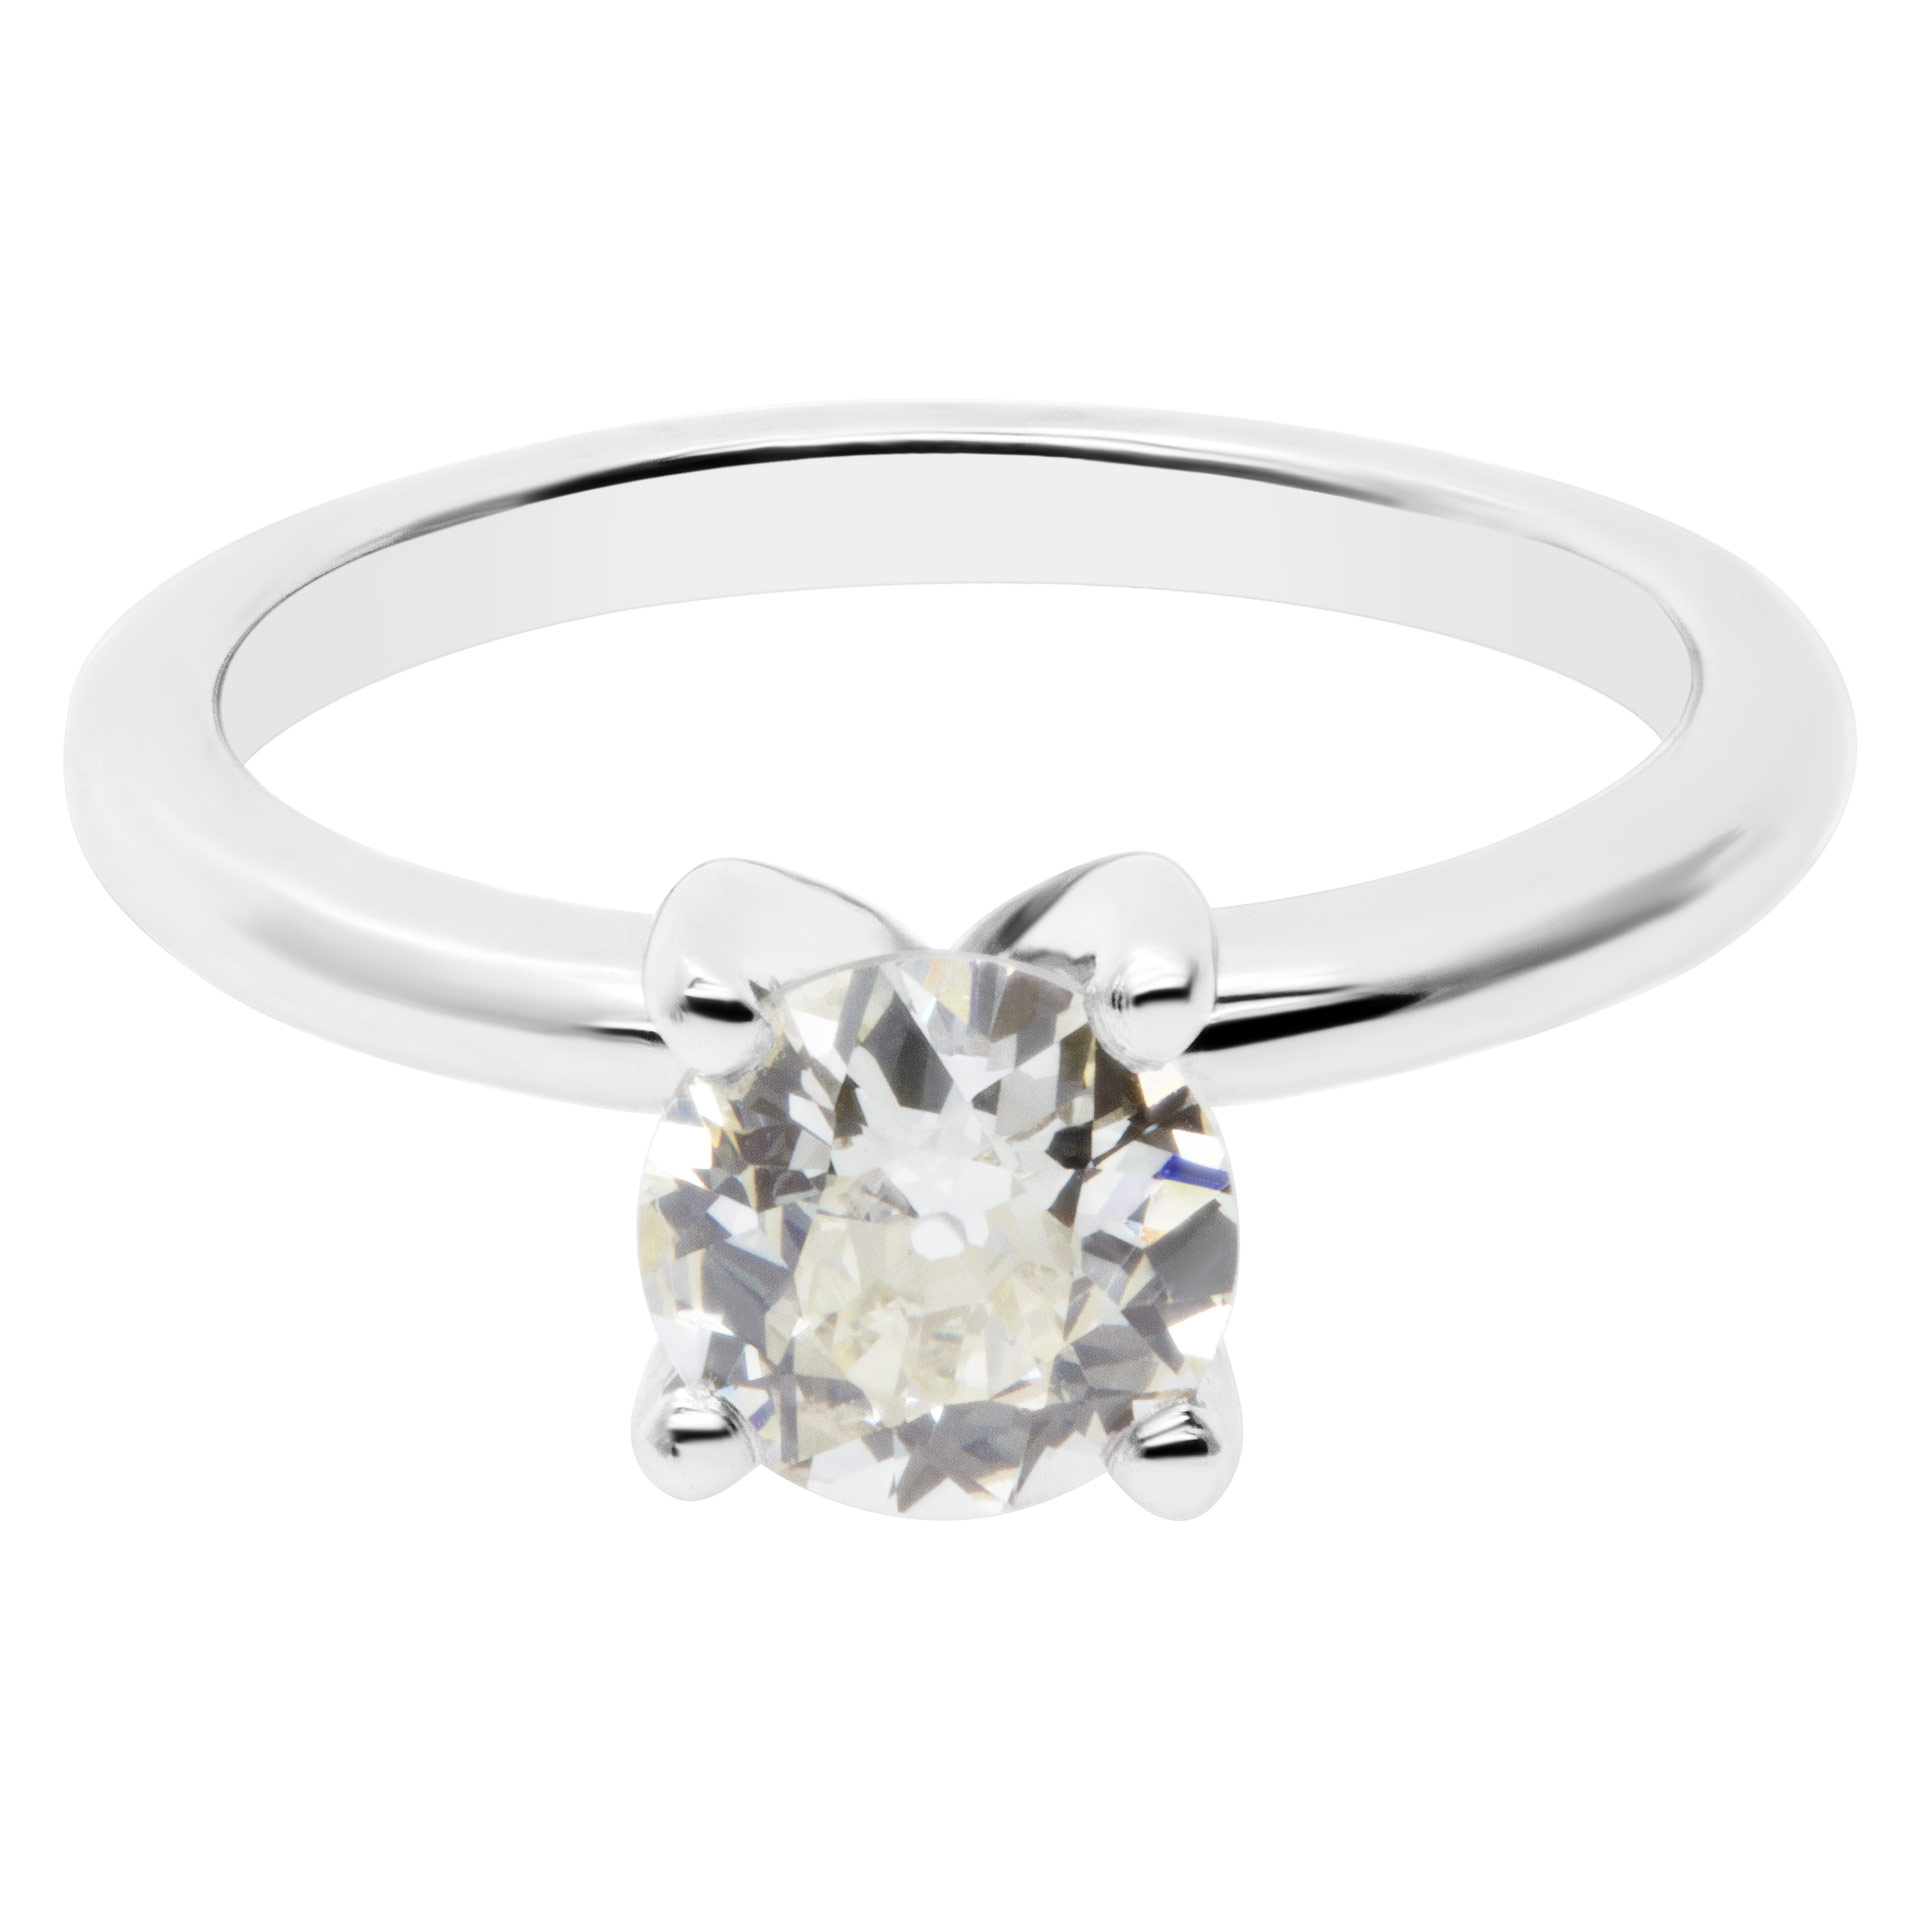 GIA certified old europeam brilliant cut diamond 1.09 carat (O to P range, VS1 clarity) solitaire ring set in platinum image 1